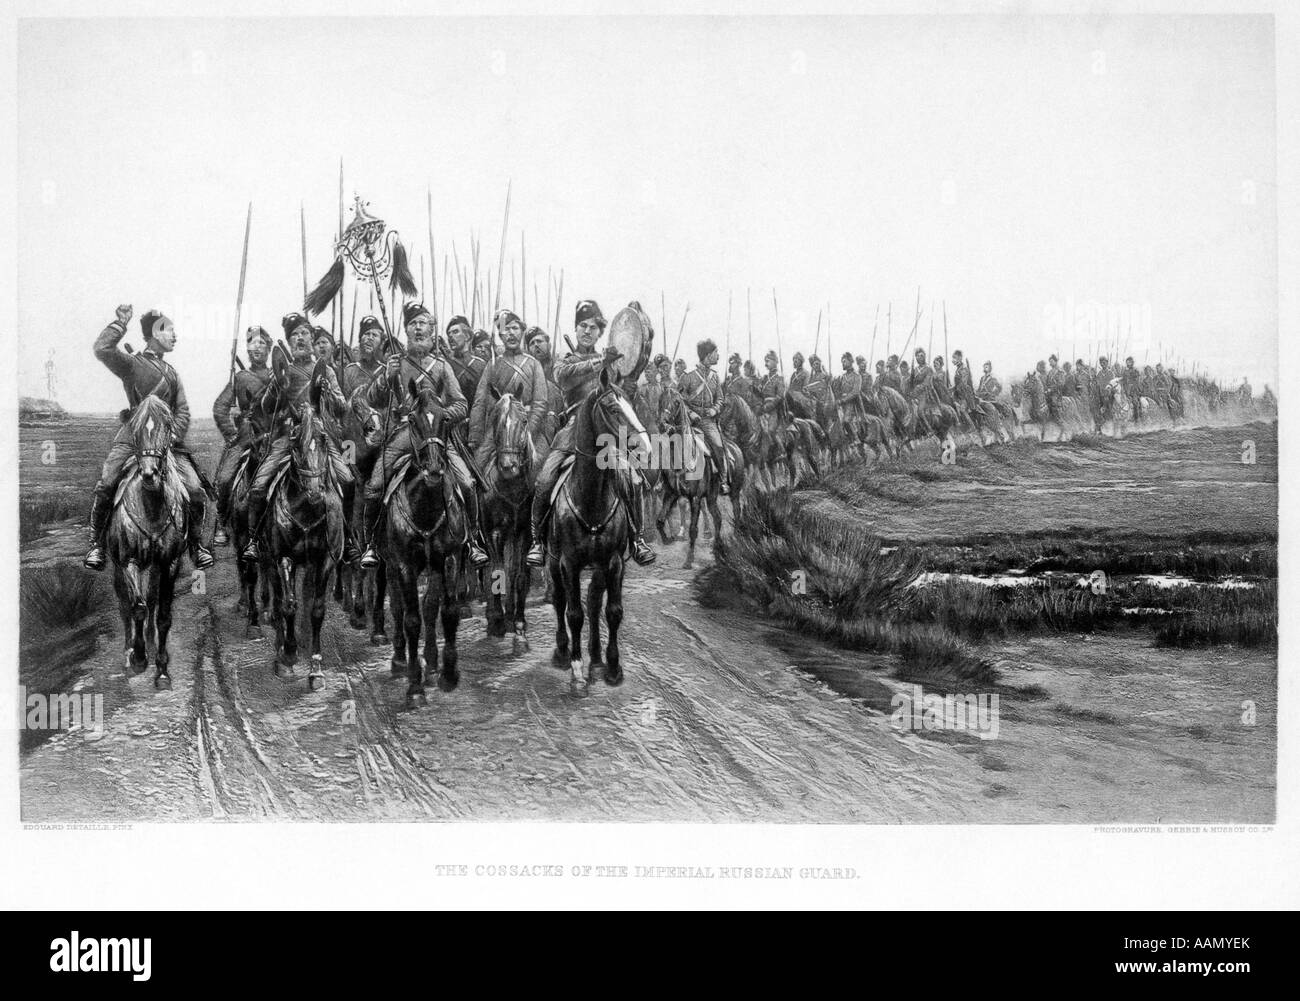 COSSACKS OF THE IMPERIAL RUSSIAN GUARD ON HORSEBACK HORSES CAVALRY CAVALRYMEN LOYAL TO THE TSAR CZAR RUSSIAN REVOLUTION MILITARY Stock Photo